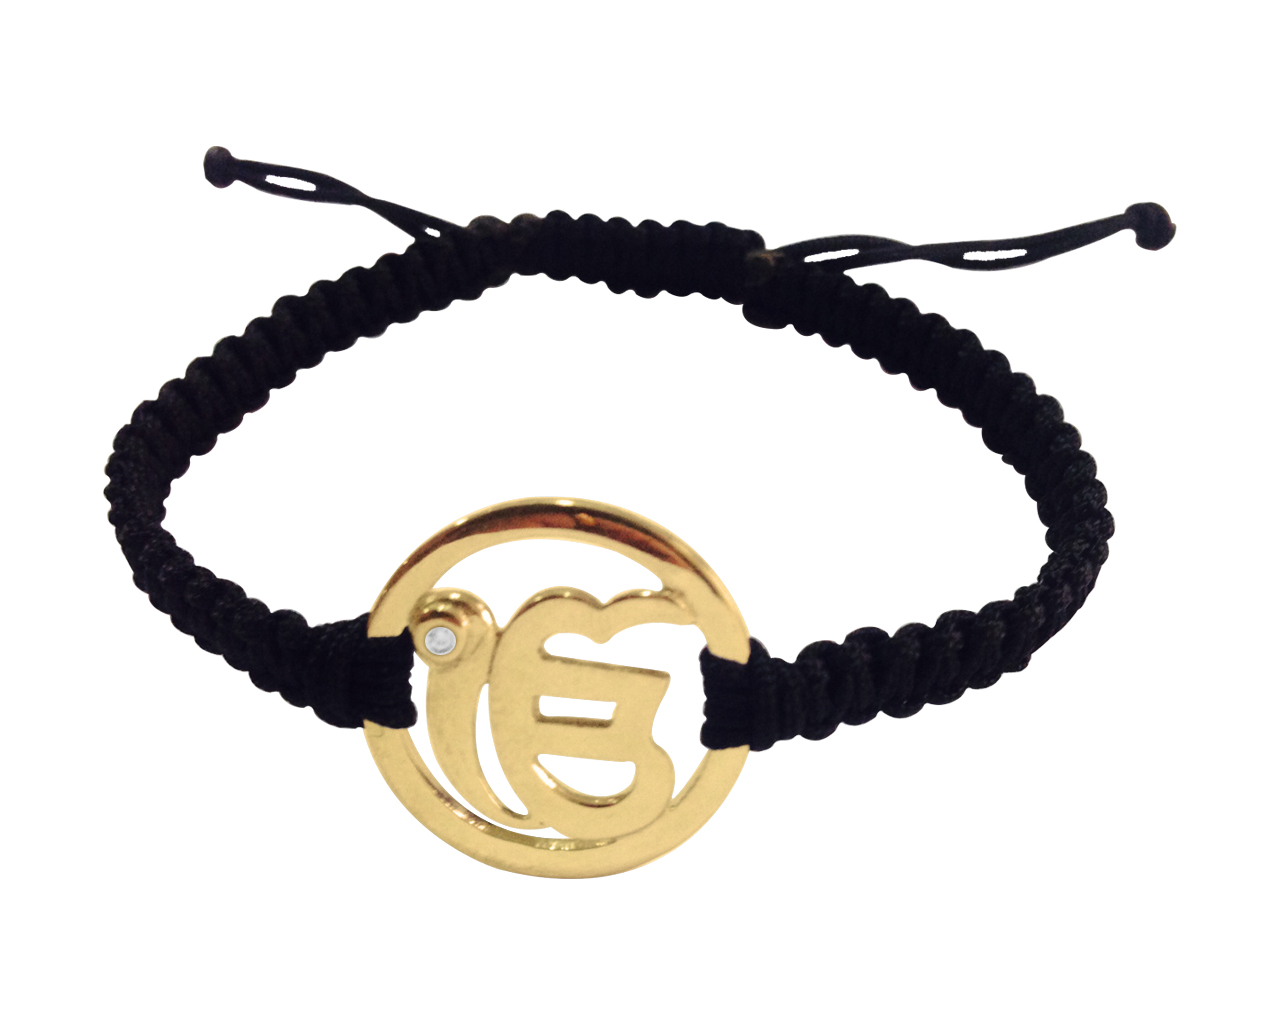 Ikonkar good luck men's #gift #bracelet in #silver with single #diamond on  a size adjustable nylon thread | Gents gift, Bracelet gift, Gents bracelet